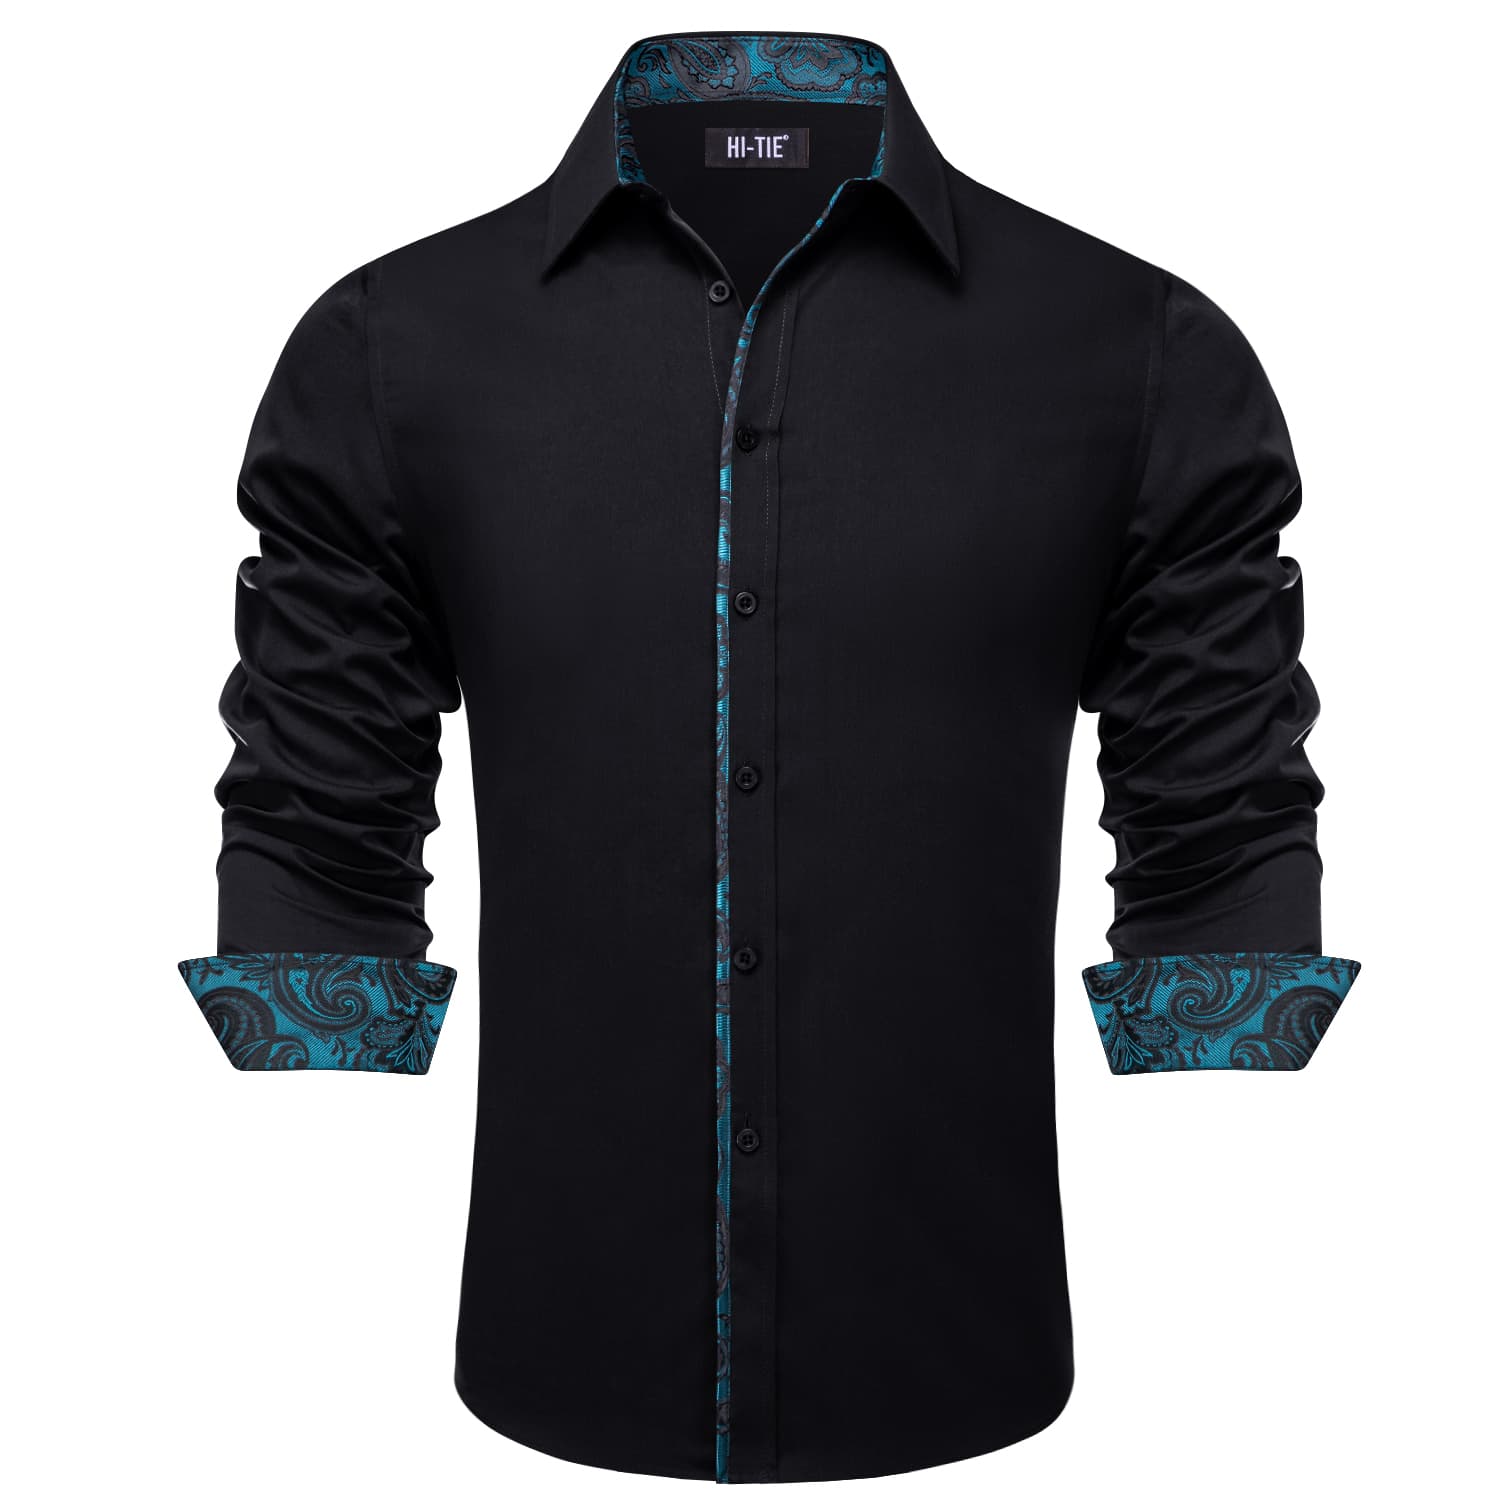 Hi-Tie Black Shirt with Teal Jacquard Collar Solid Shirt